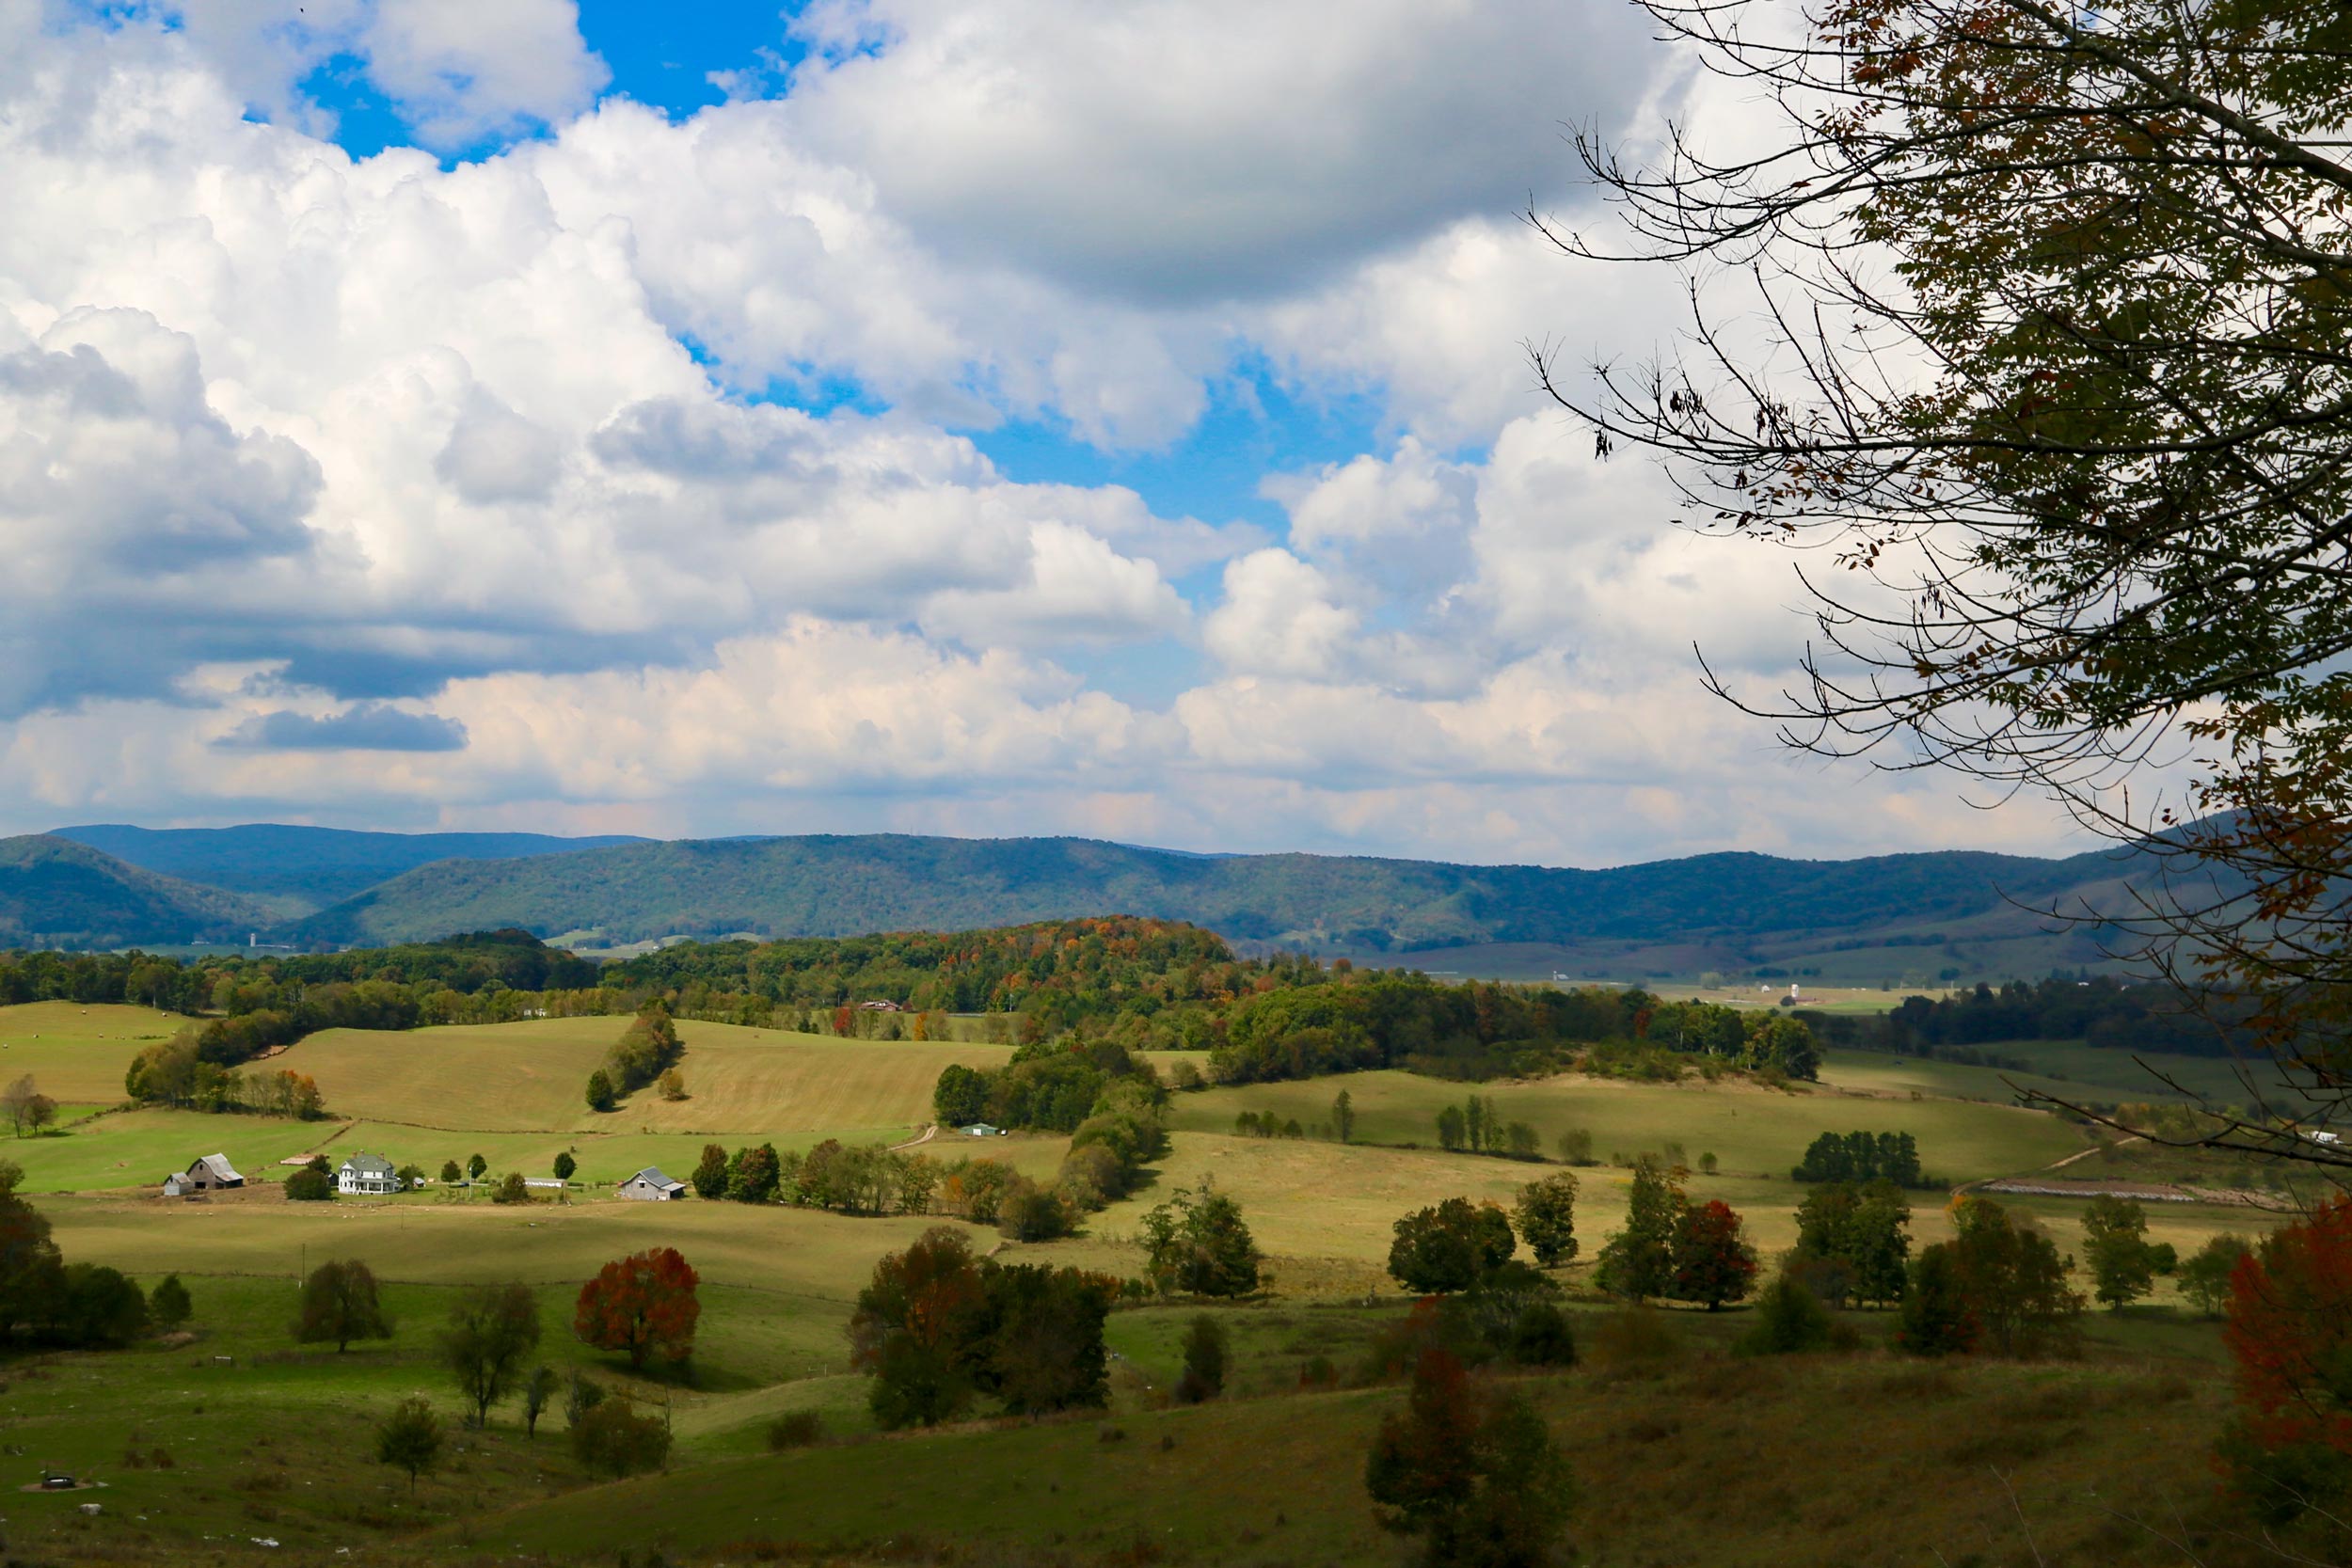 Farm land with the Blue Ridge mountains as the backdrop